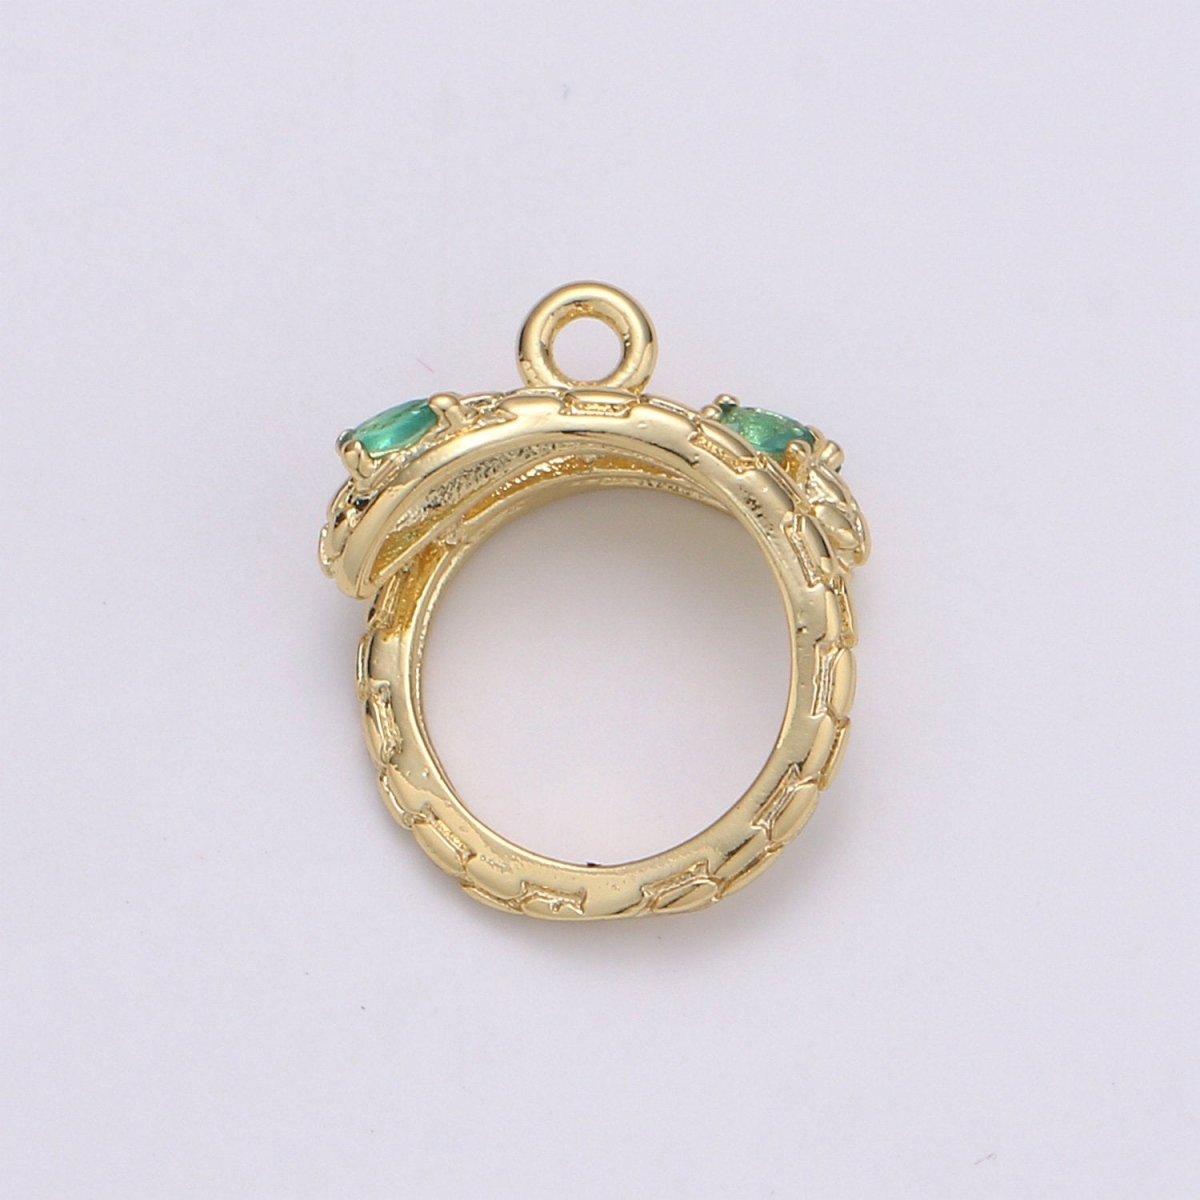 14K Gold Filled Serpent Pendant with Green CZ, Ancient Greek Mythology Pendant, Earing DIY, Snake Pendant, Green CZ C-429 - DLUXCA